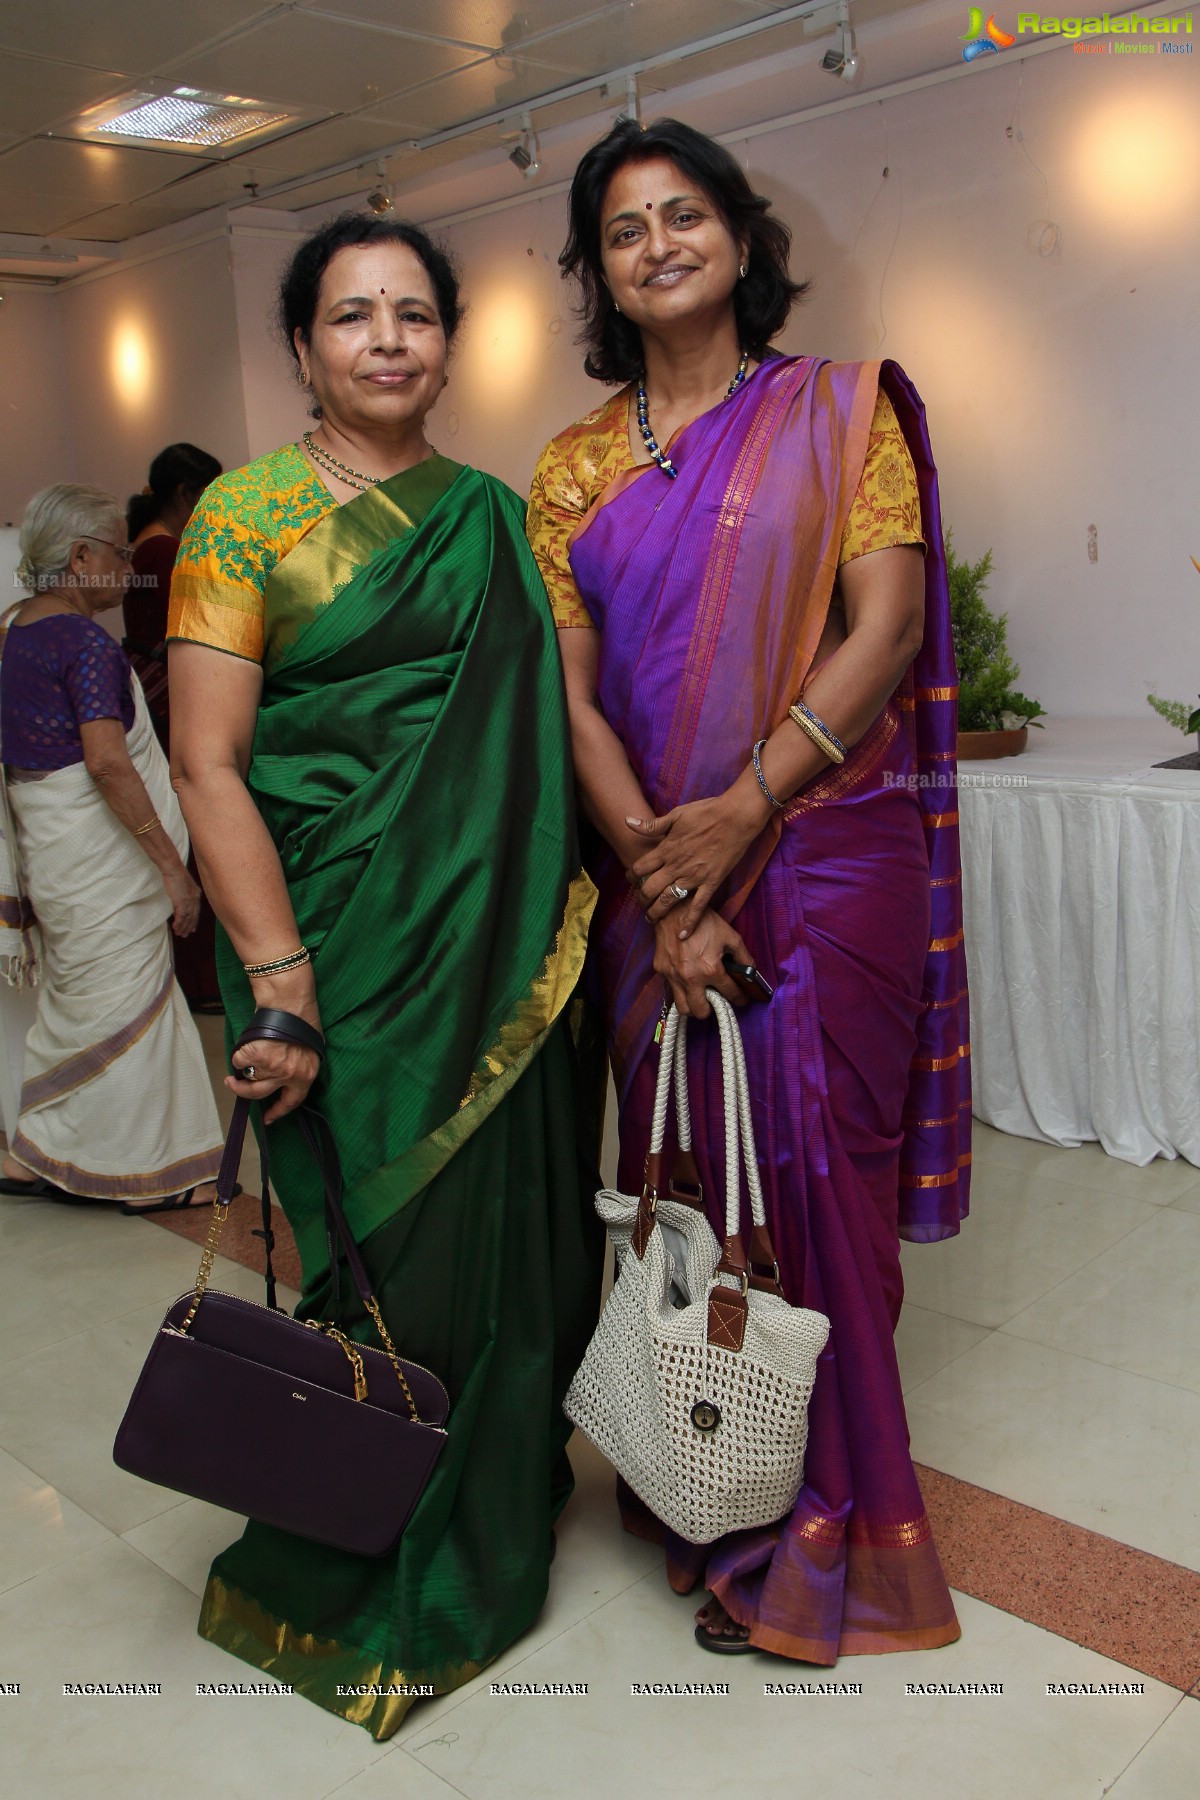 Festivals of India - Poola Panduga by Ikebana International Hyderabad Chapter